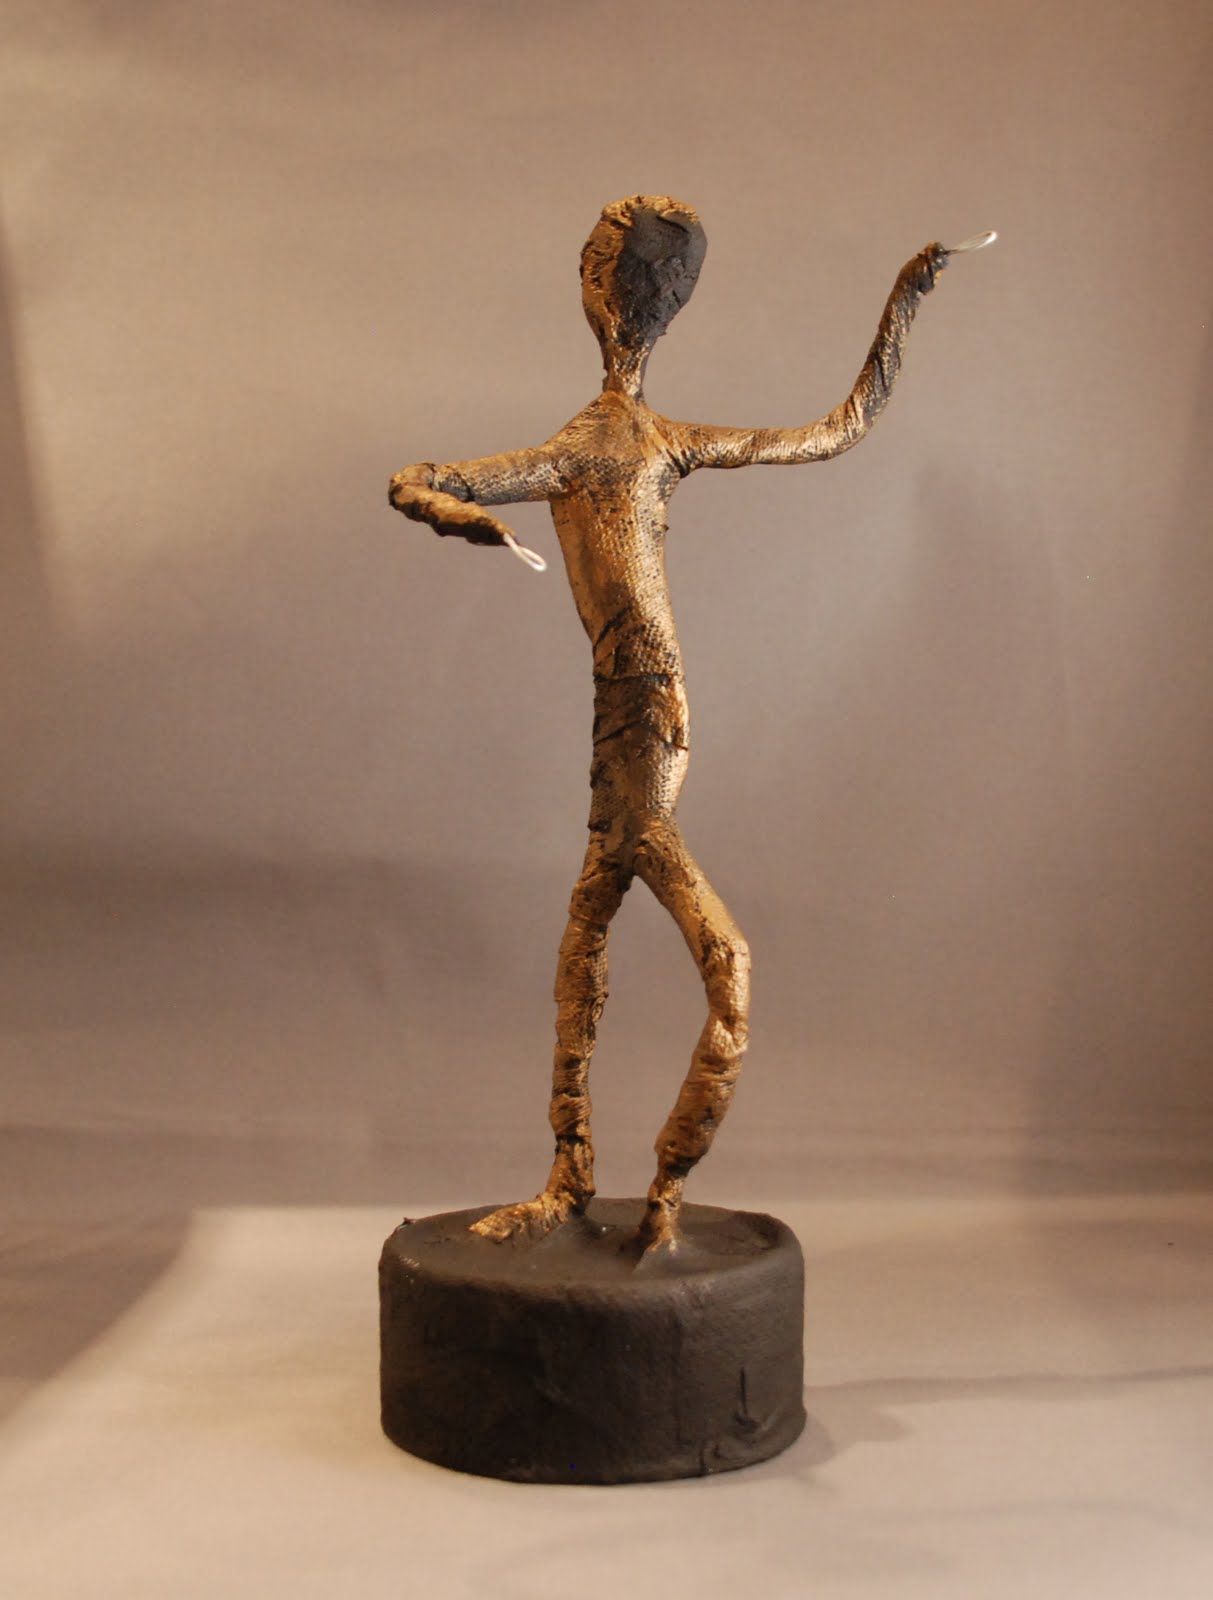 Paper Mache Human Sculpture